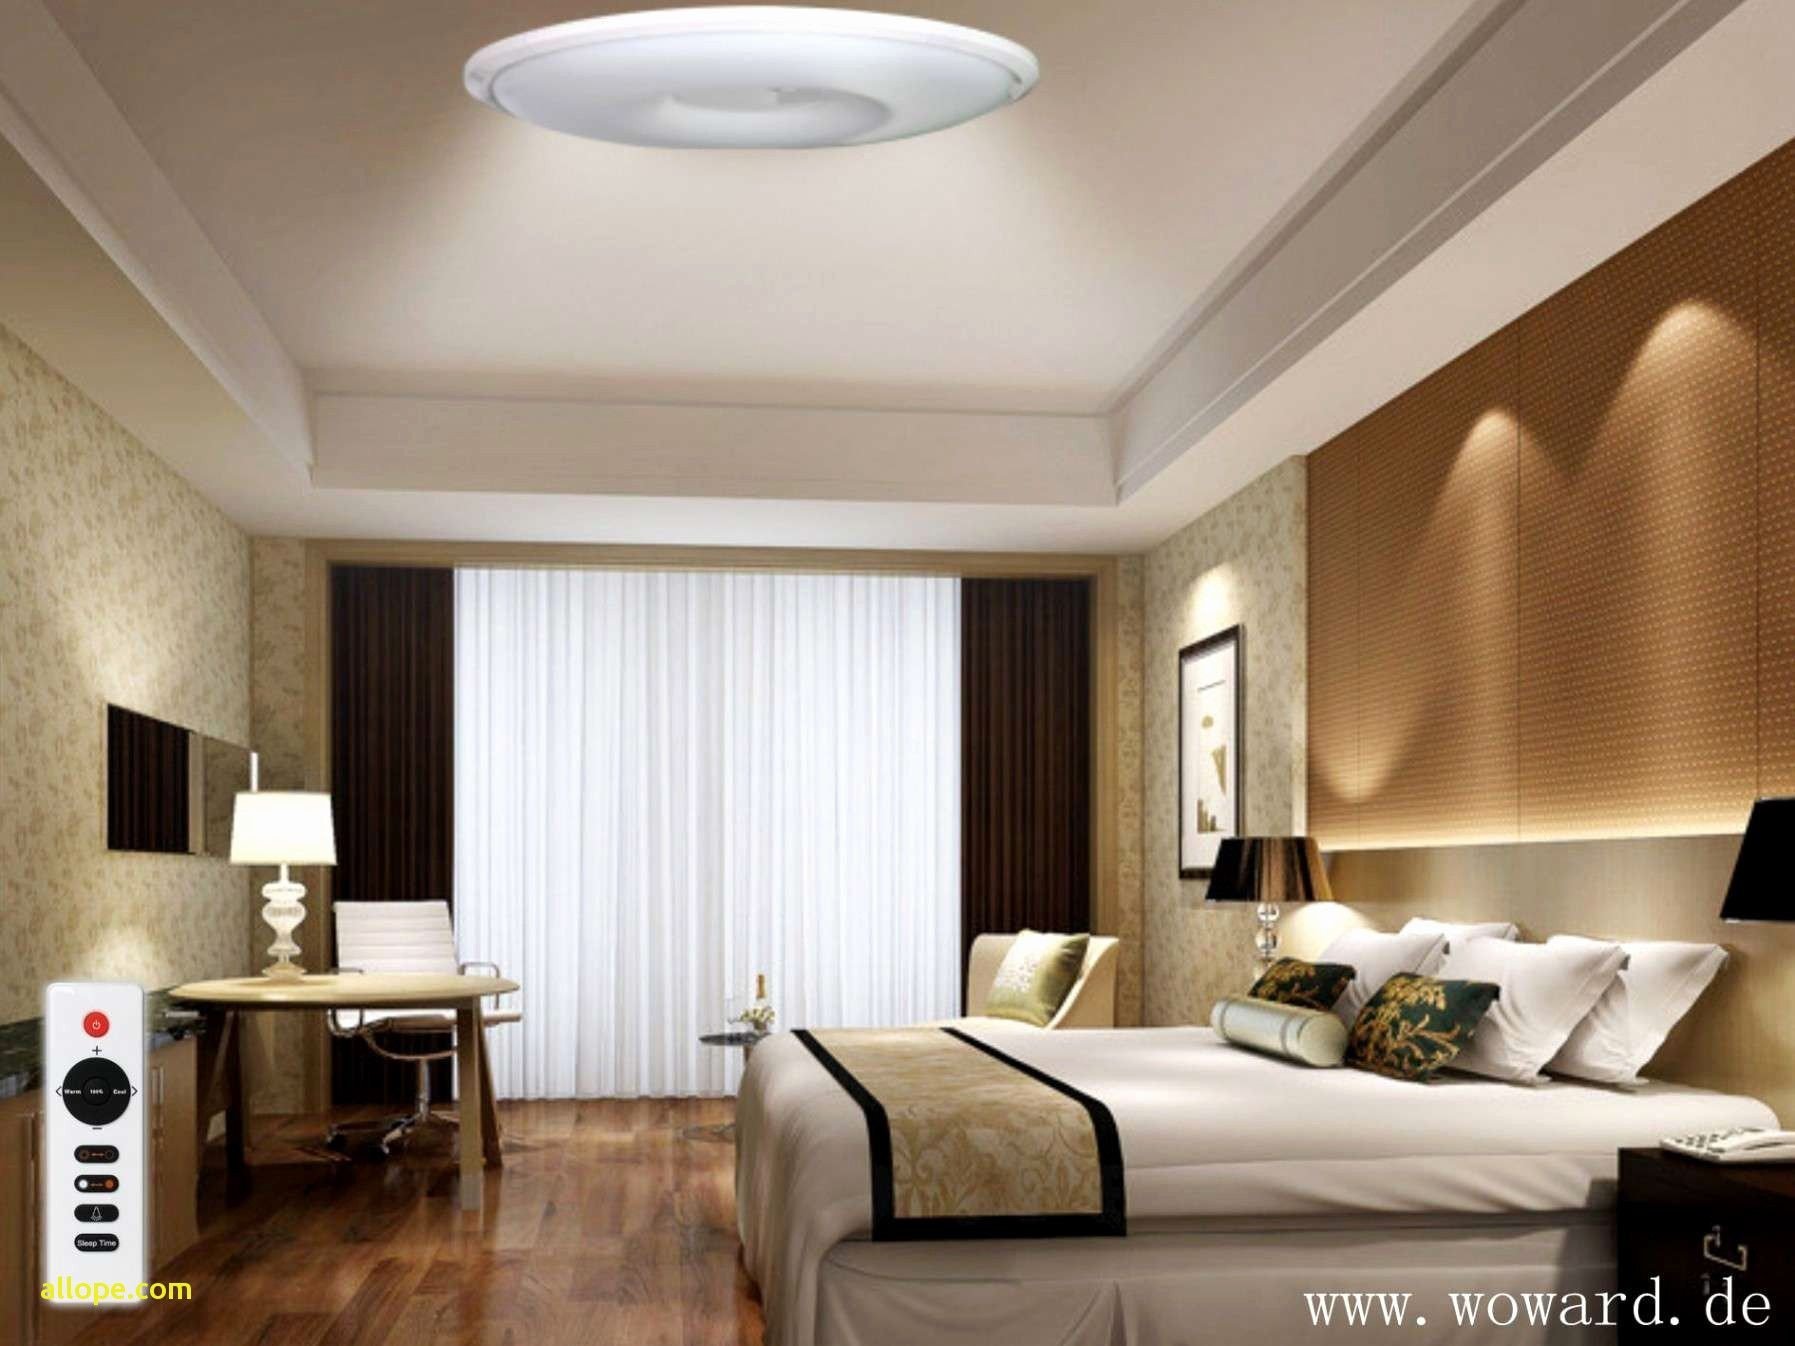 Led Lighting for Bedroom Luxury Led Stehlampe Dimmbar Vornehm Nachttischlampe Wand 0d Design